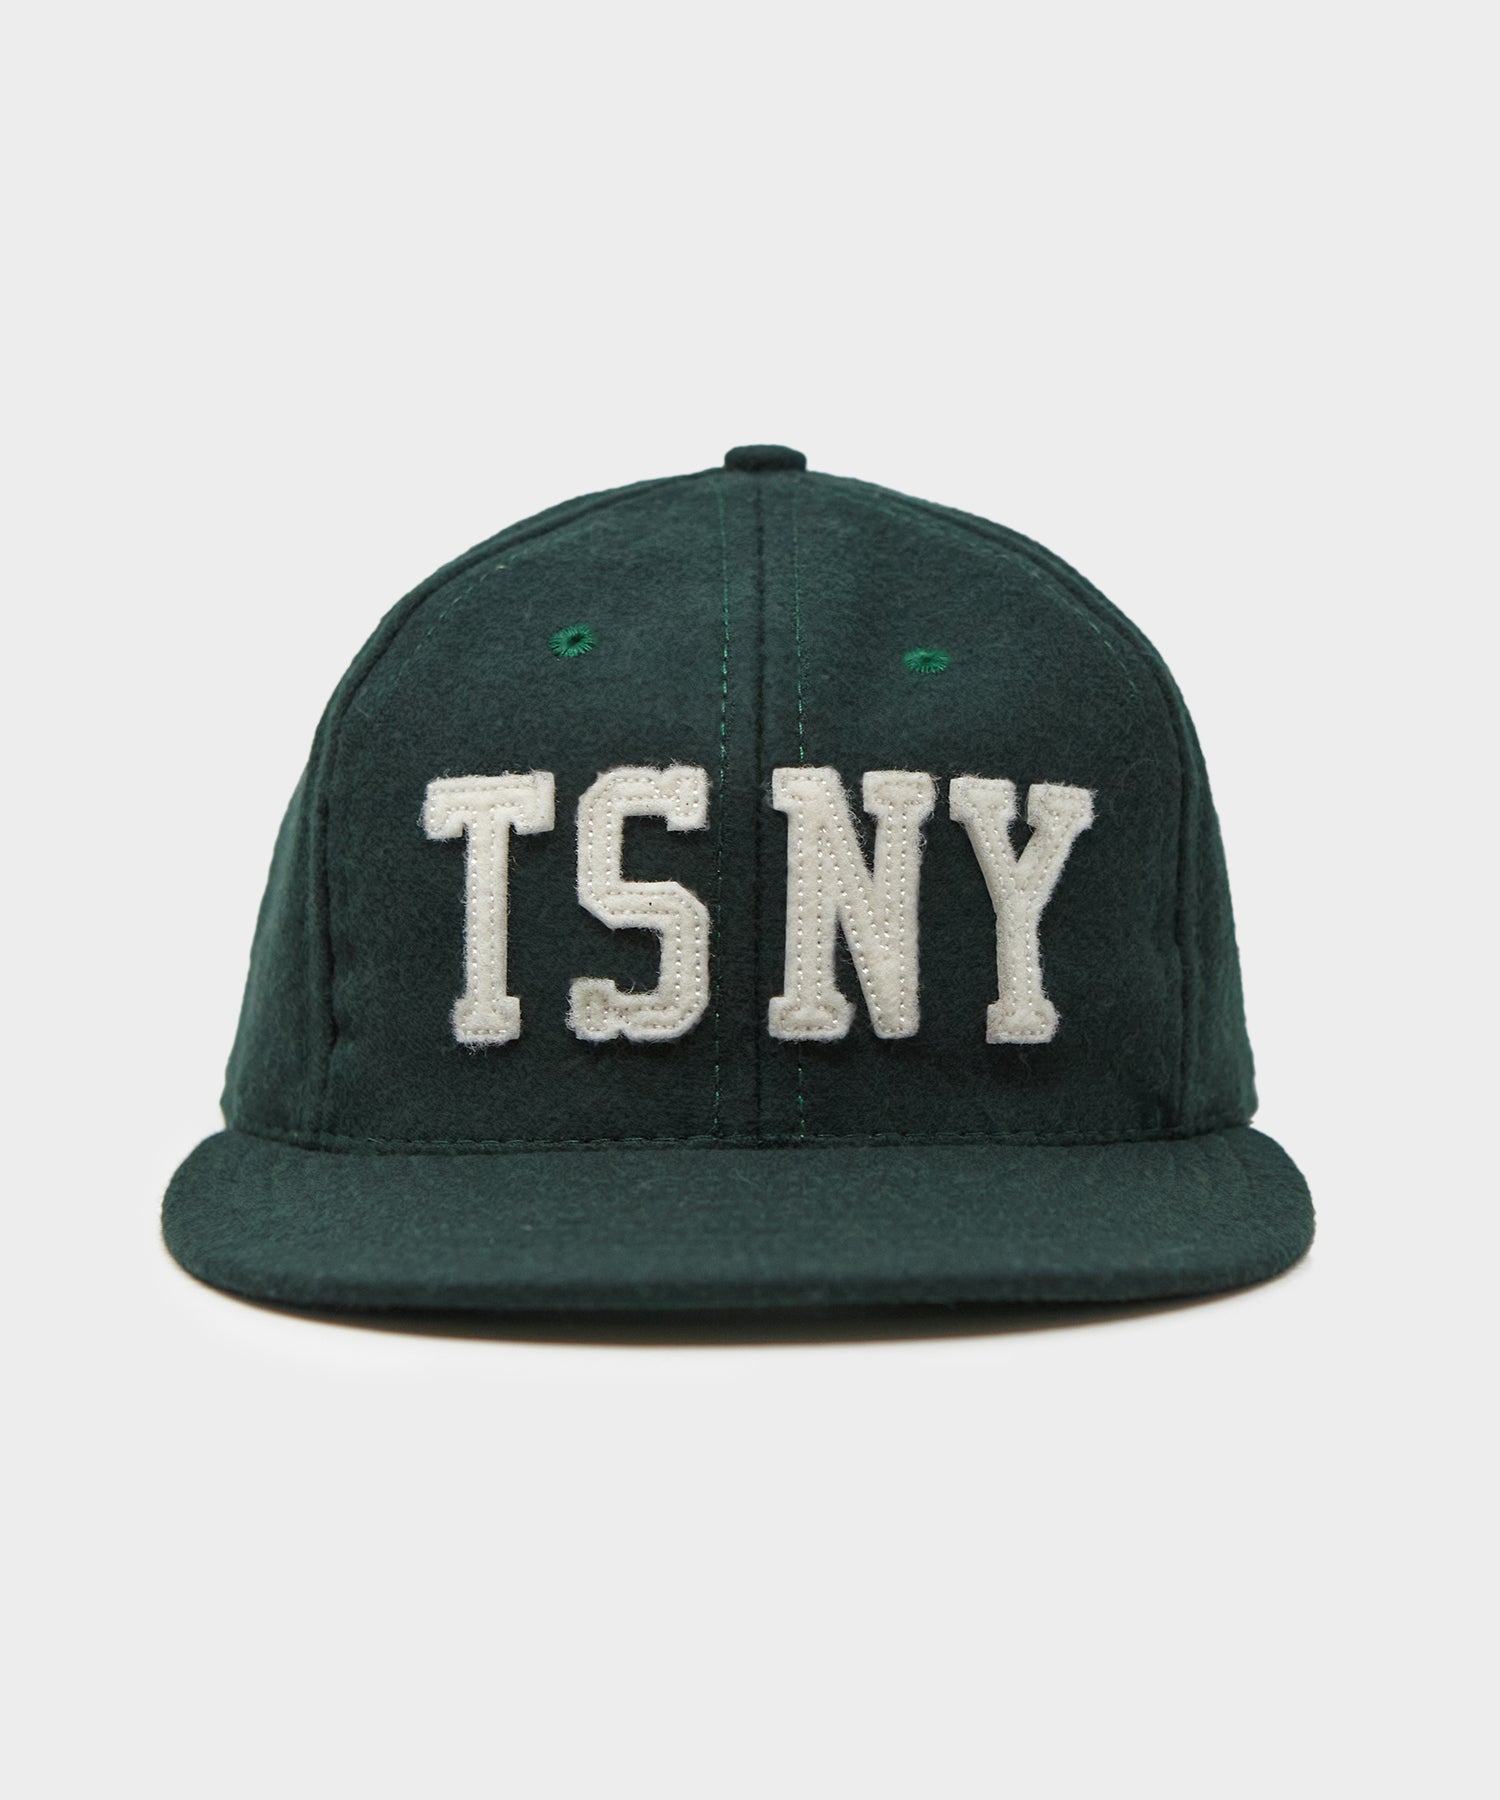 Exclusive Ebbets TSNY Cap In Green